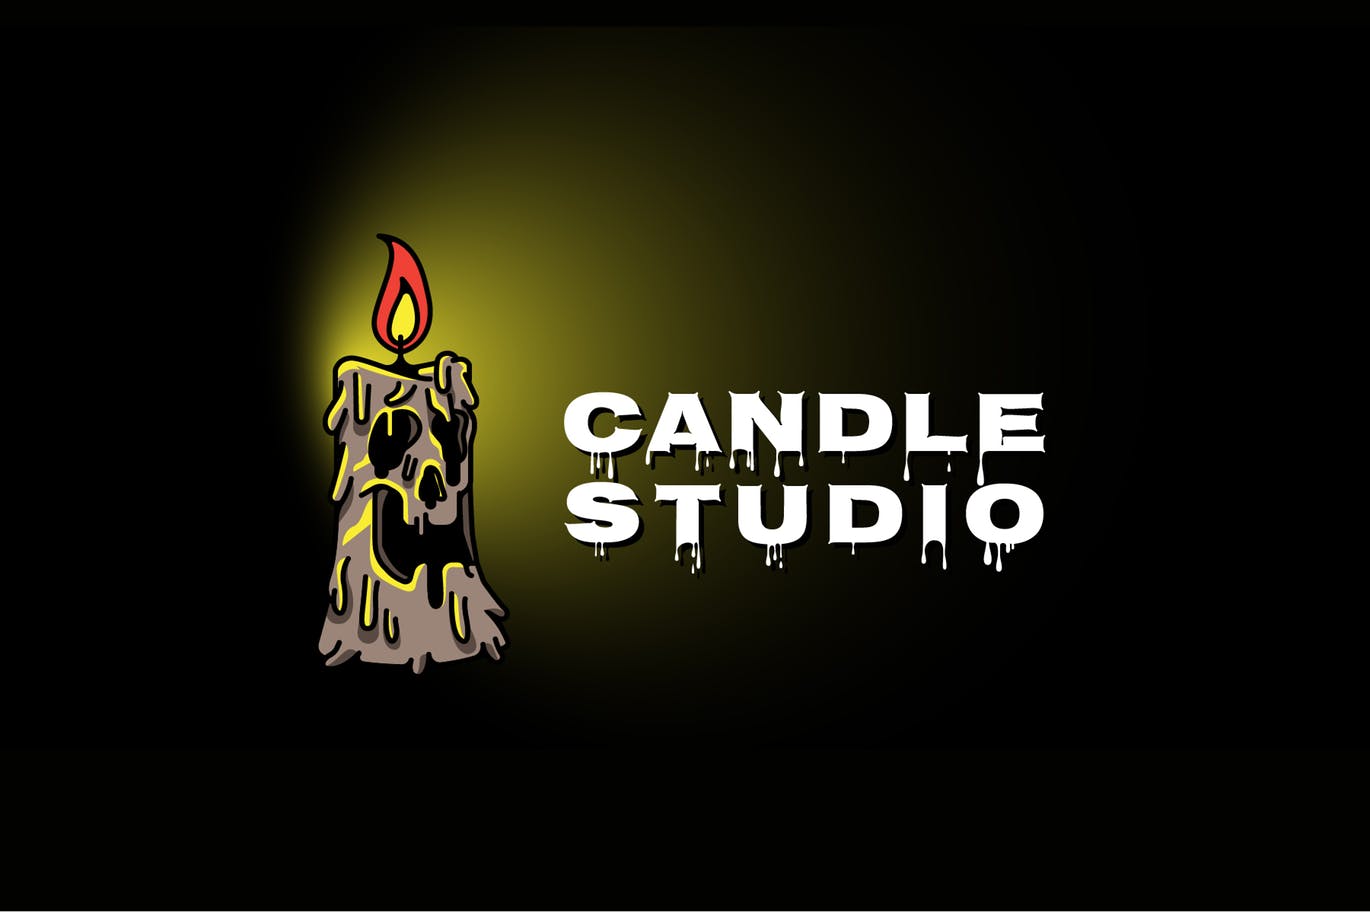 恐怖蜡烛工作室Logo设计素材库精选模板 Candle Horror Mascot Logo插图